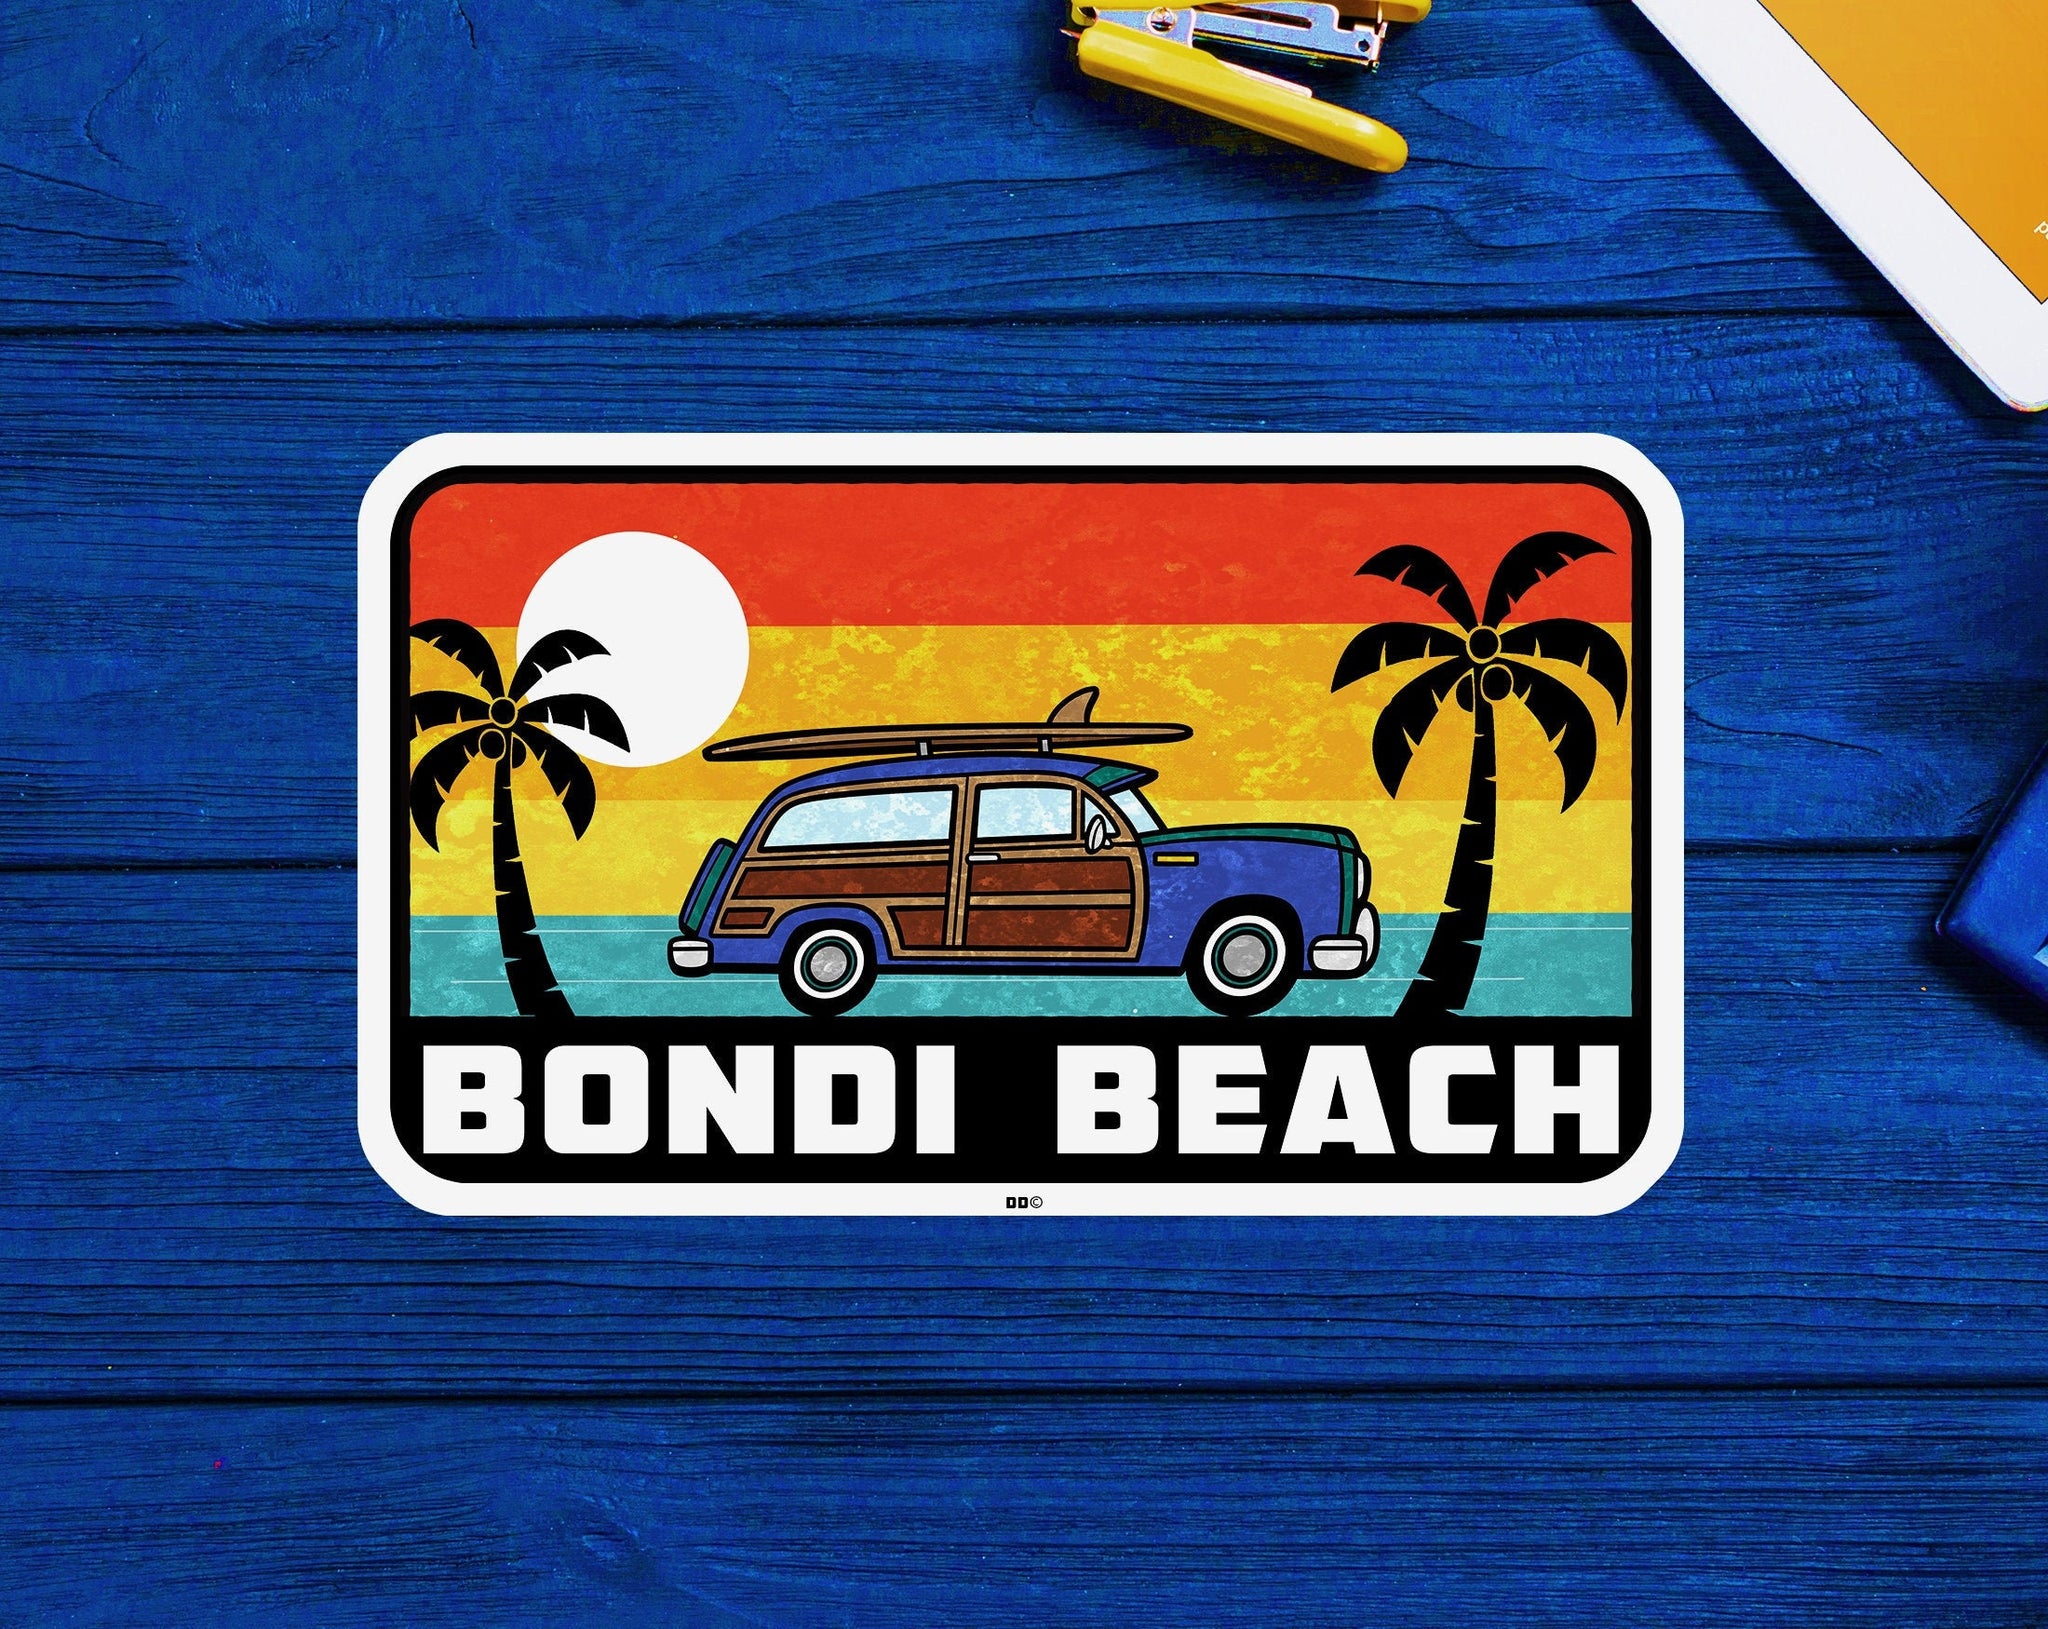 Bondi Beach Australia Surf Decal Sticker 3.75" x 2.5" Surfing Beach New South Wales